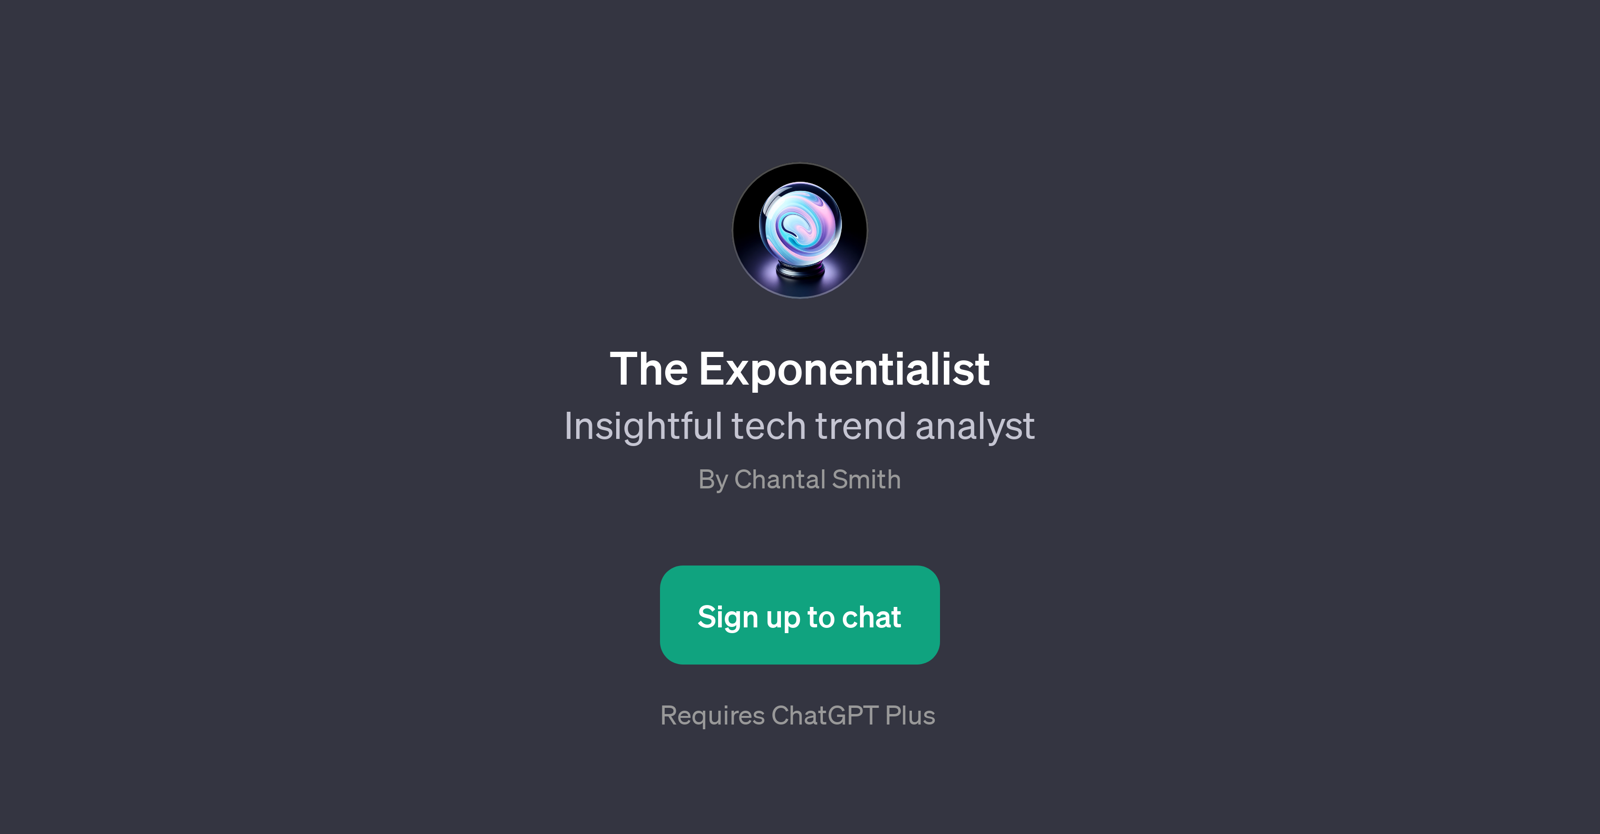 The Exponentialist website